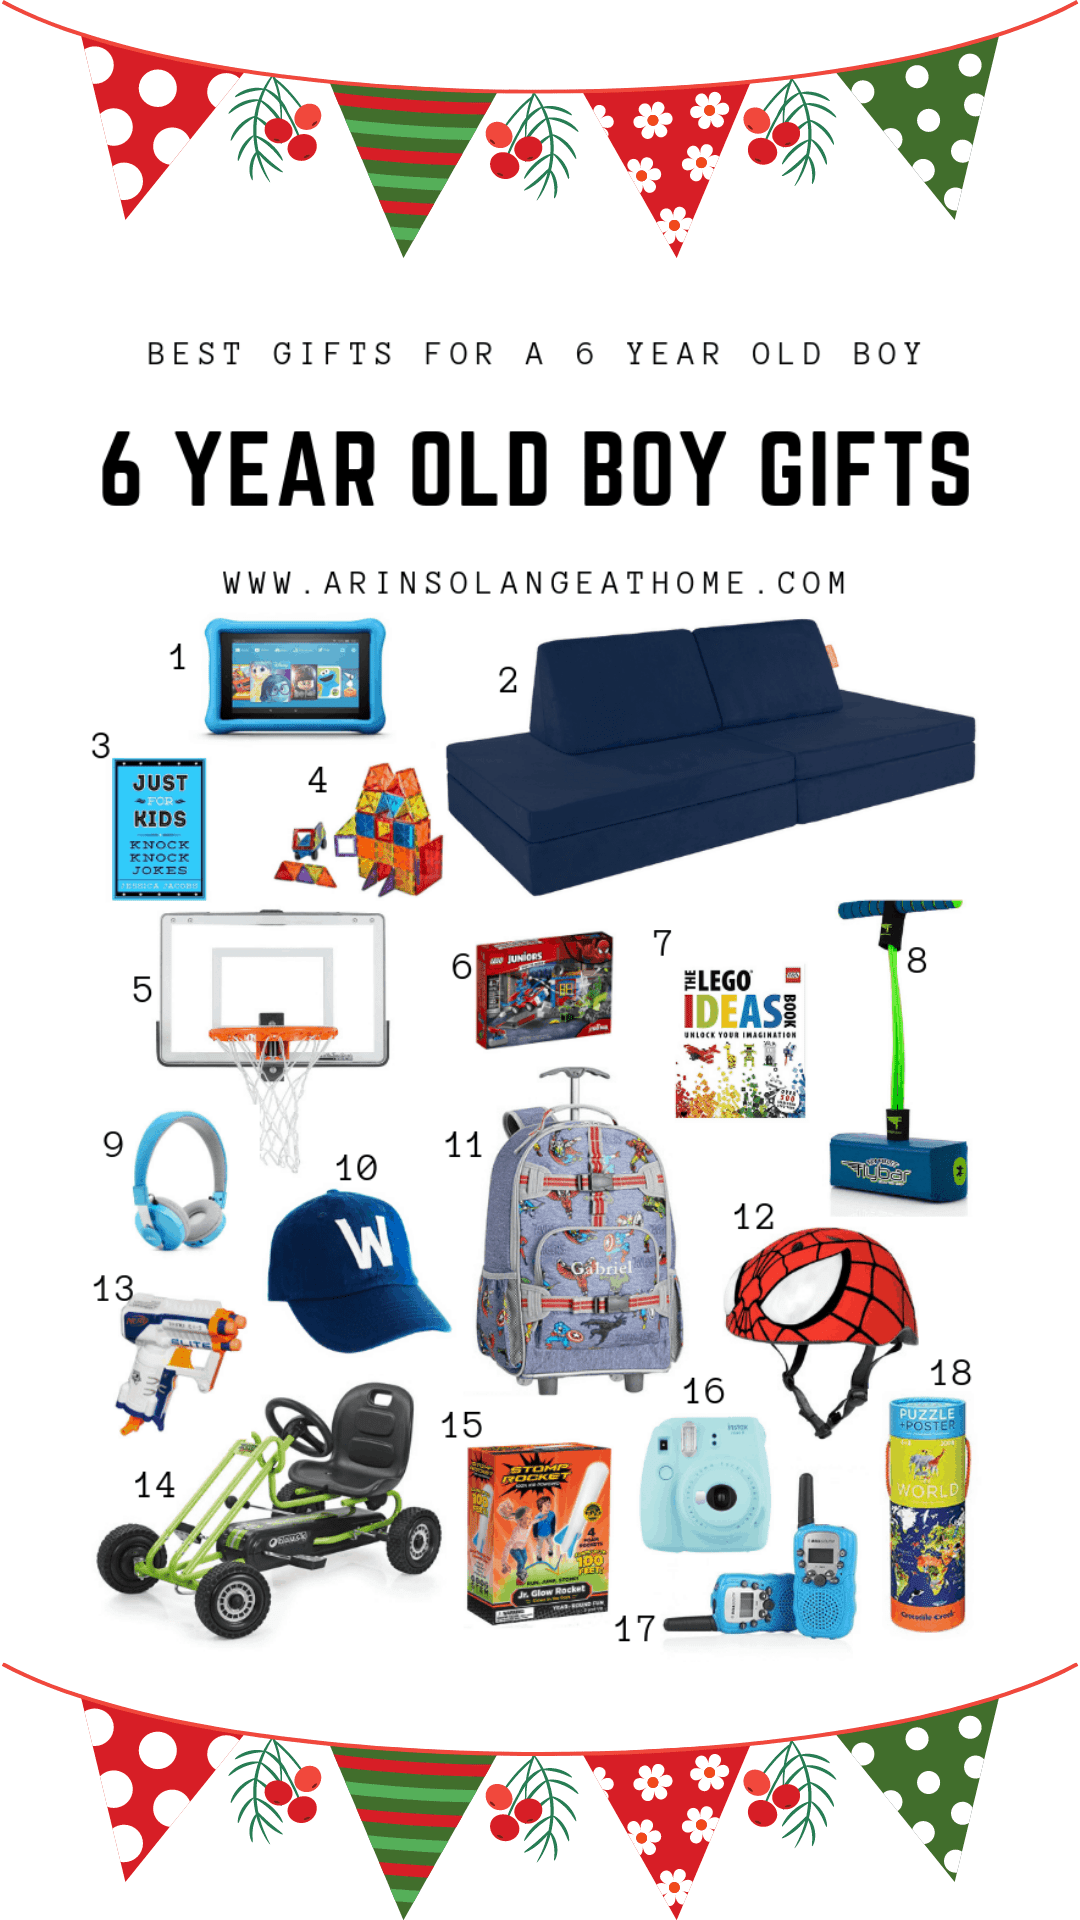 6 Year Old Boy Gift Guide - arinsolangeathome